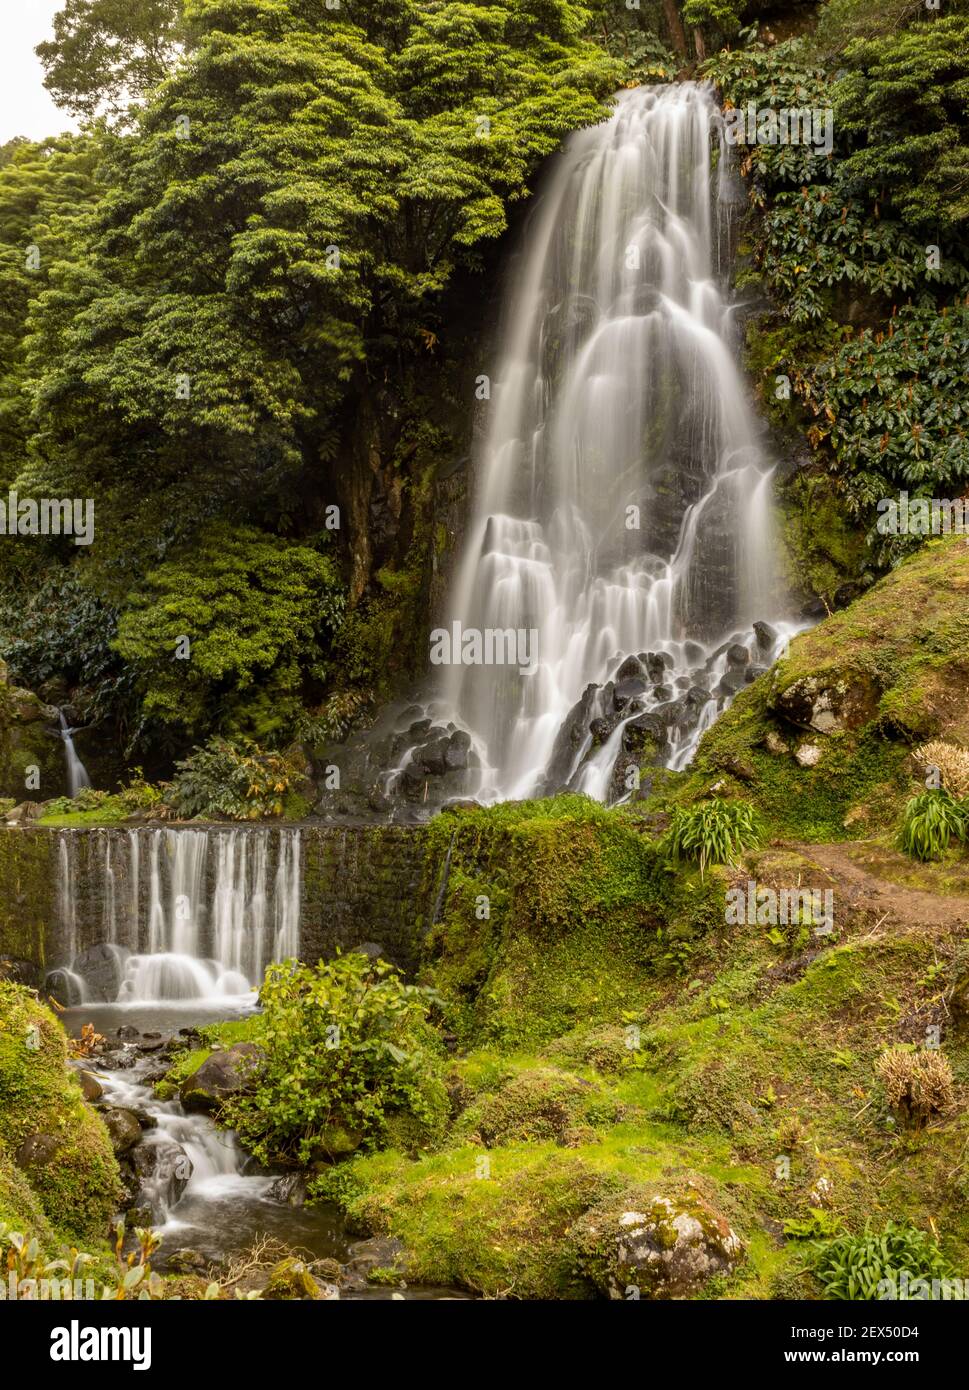 Wonderful waterfall at Nordeste, Azores travel destination, Sao Miguel island. Stock Photo